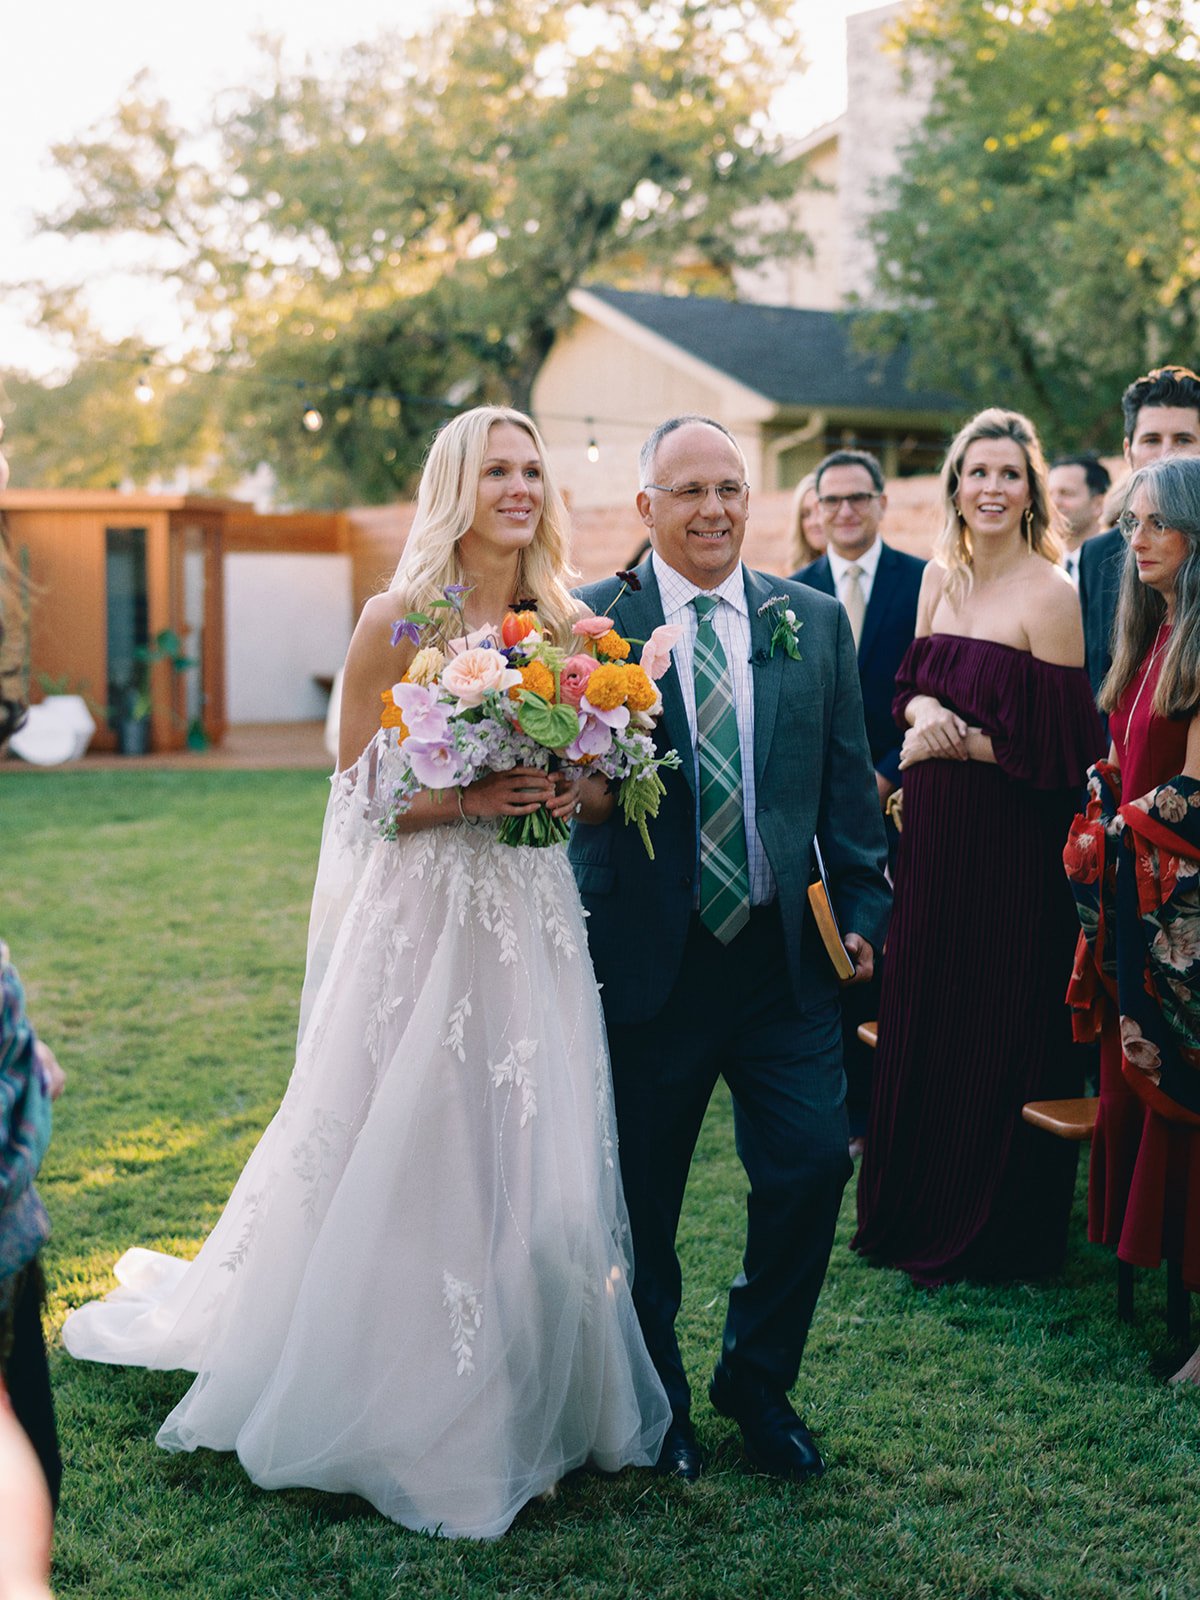 Best-Austin-Wedding-Photographers-Elopement-Film-35mm-Asheville-Santa-Barbara-Backyard-26.jpg